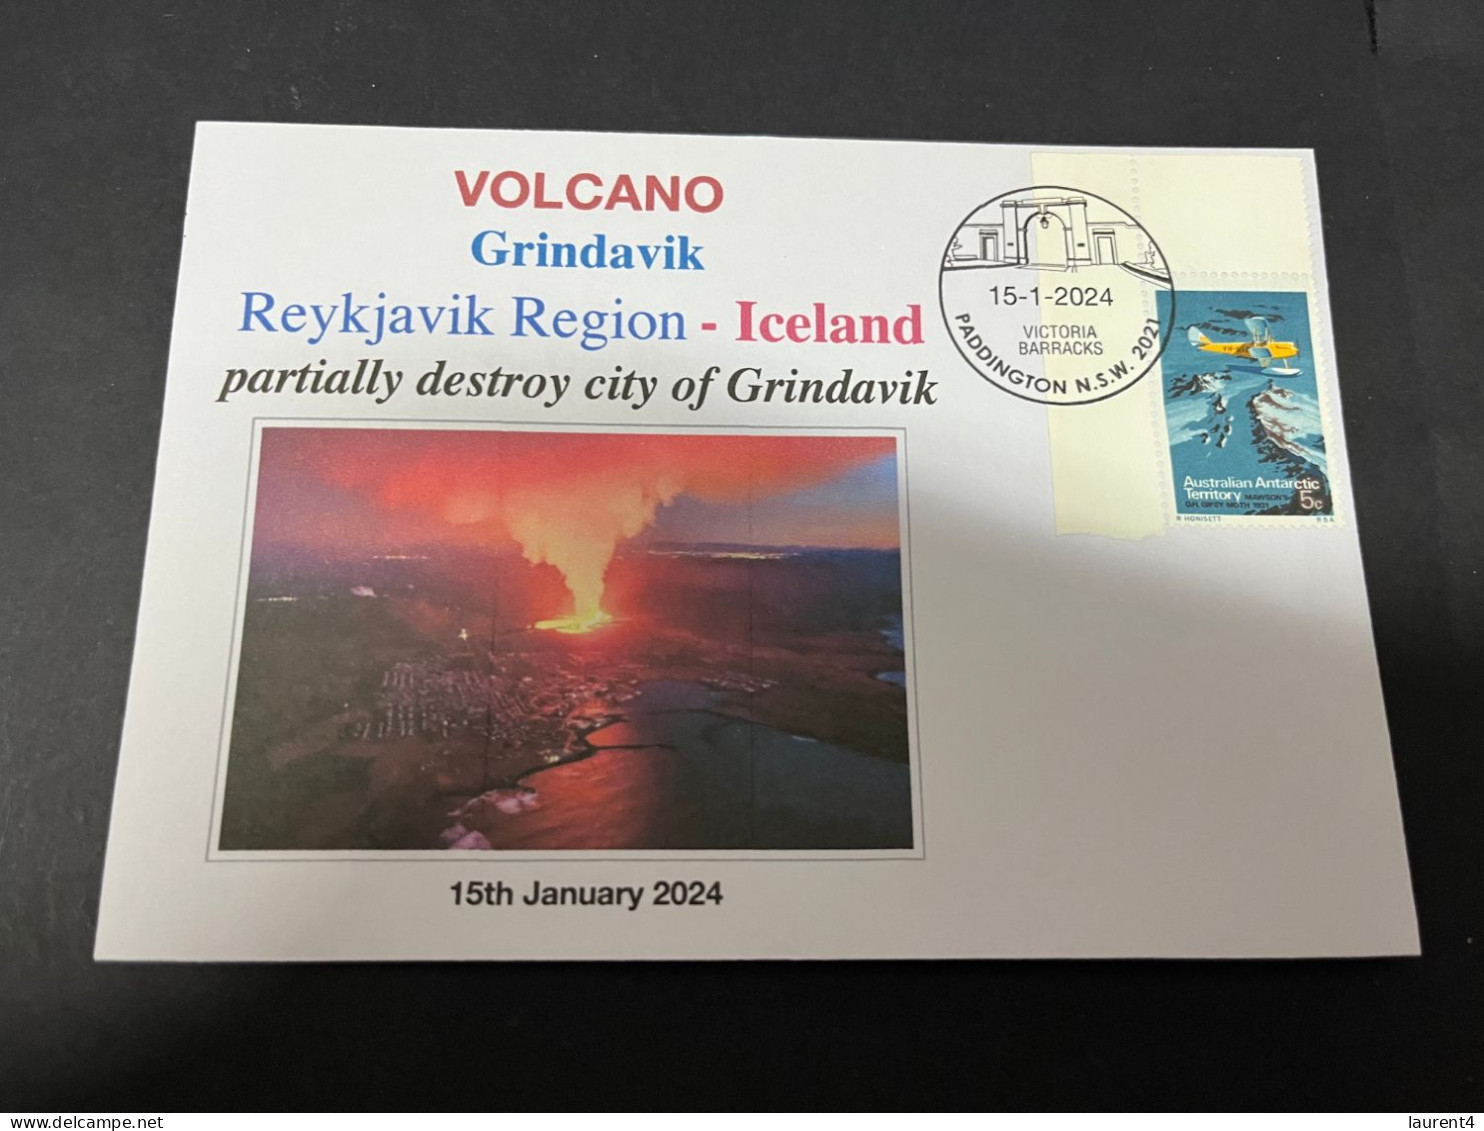 19-1-2024 (1 X 32) Iceland - Volcano Erution Partially Destroyed Fishing City Of Grindavik - Vulkanen